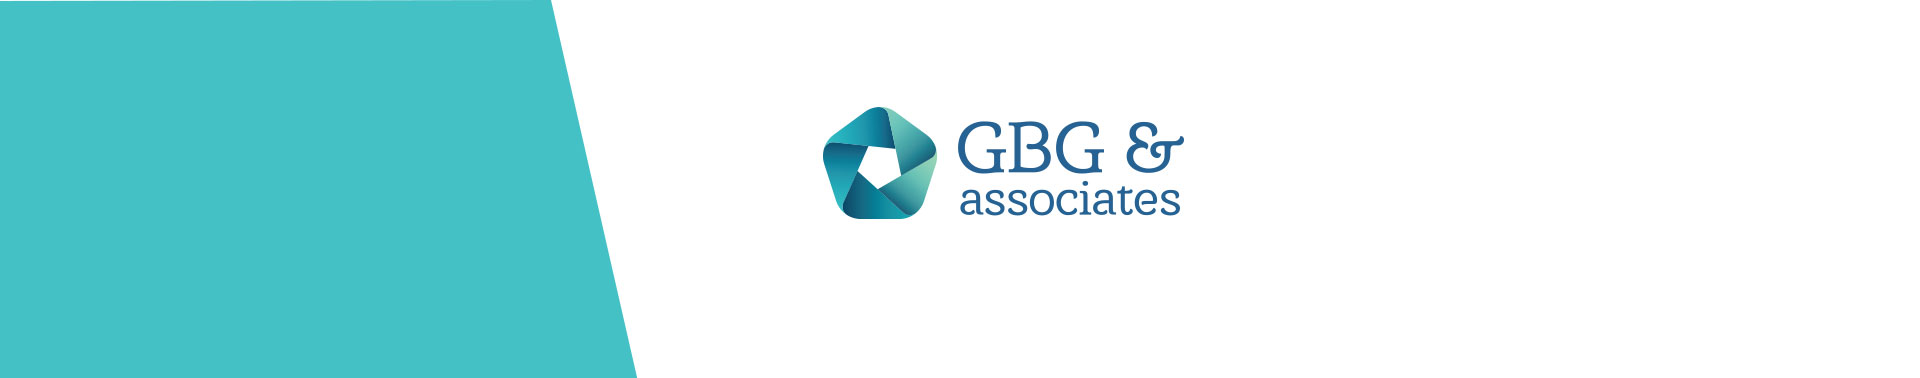 GBG Case Study Website